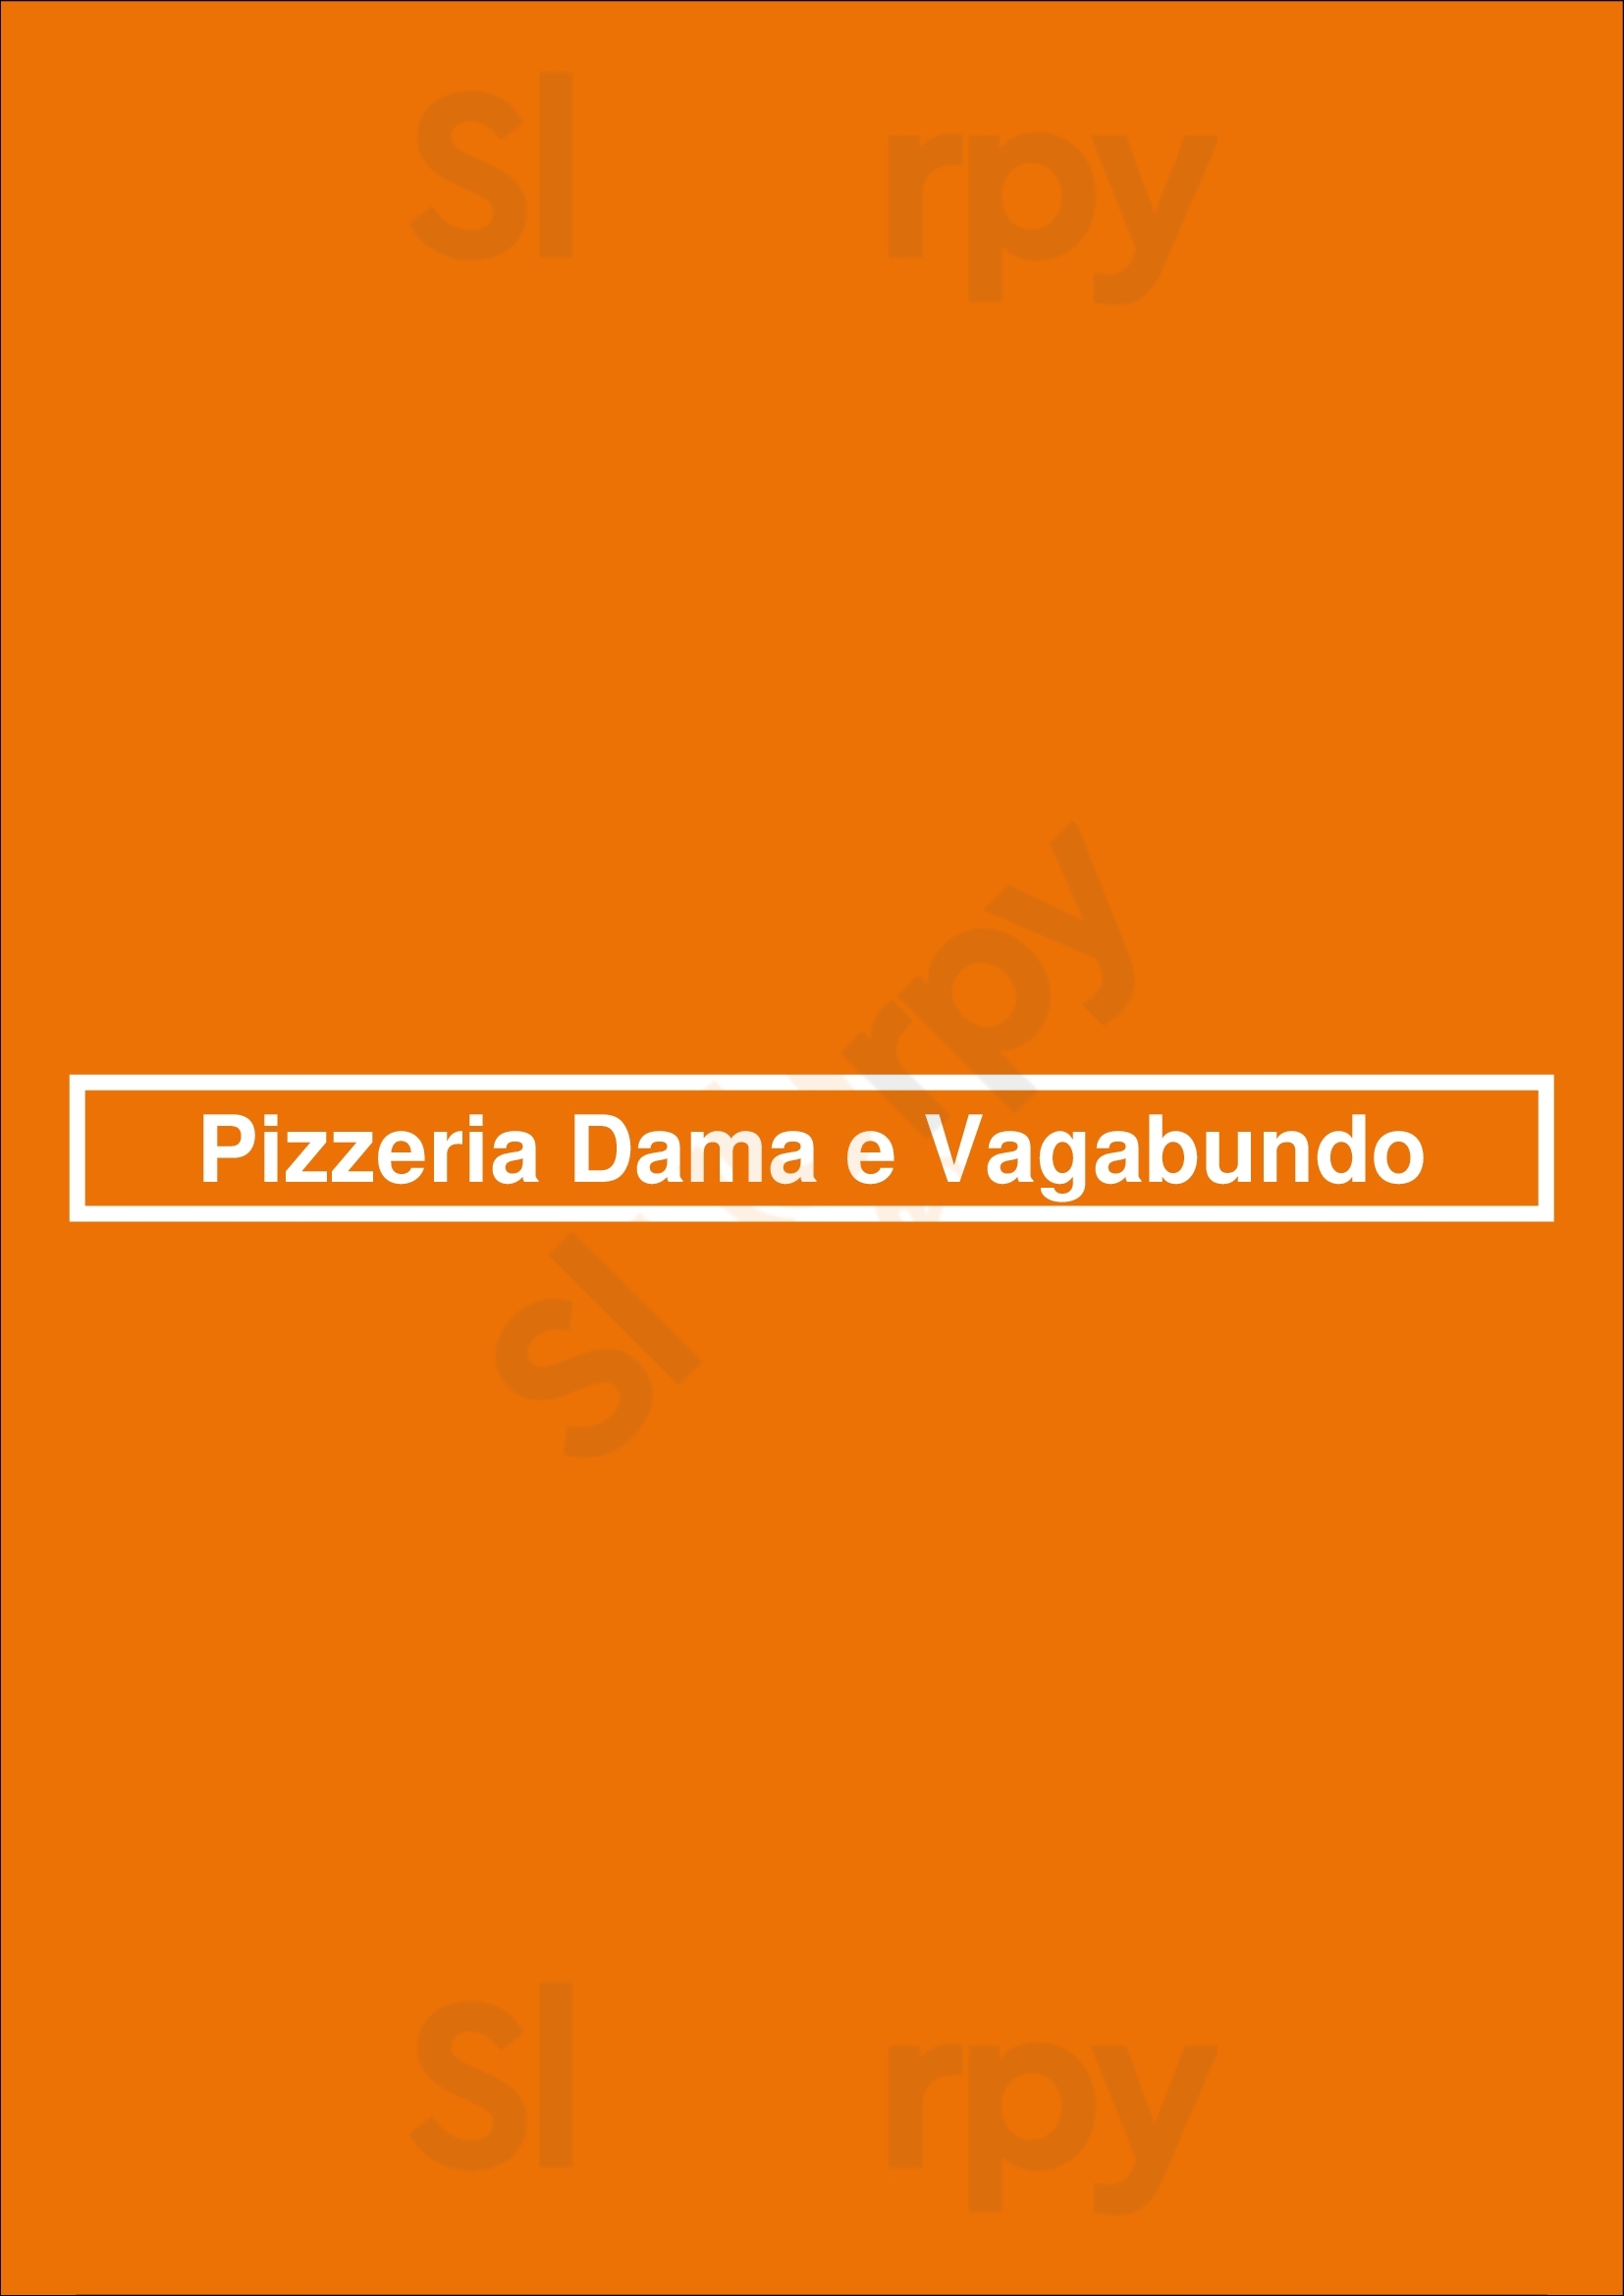 Pizzeria Dama E Vagabundo Lisboa Menu - 1